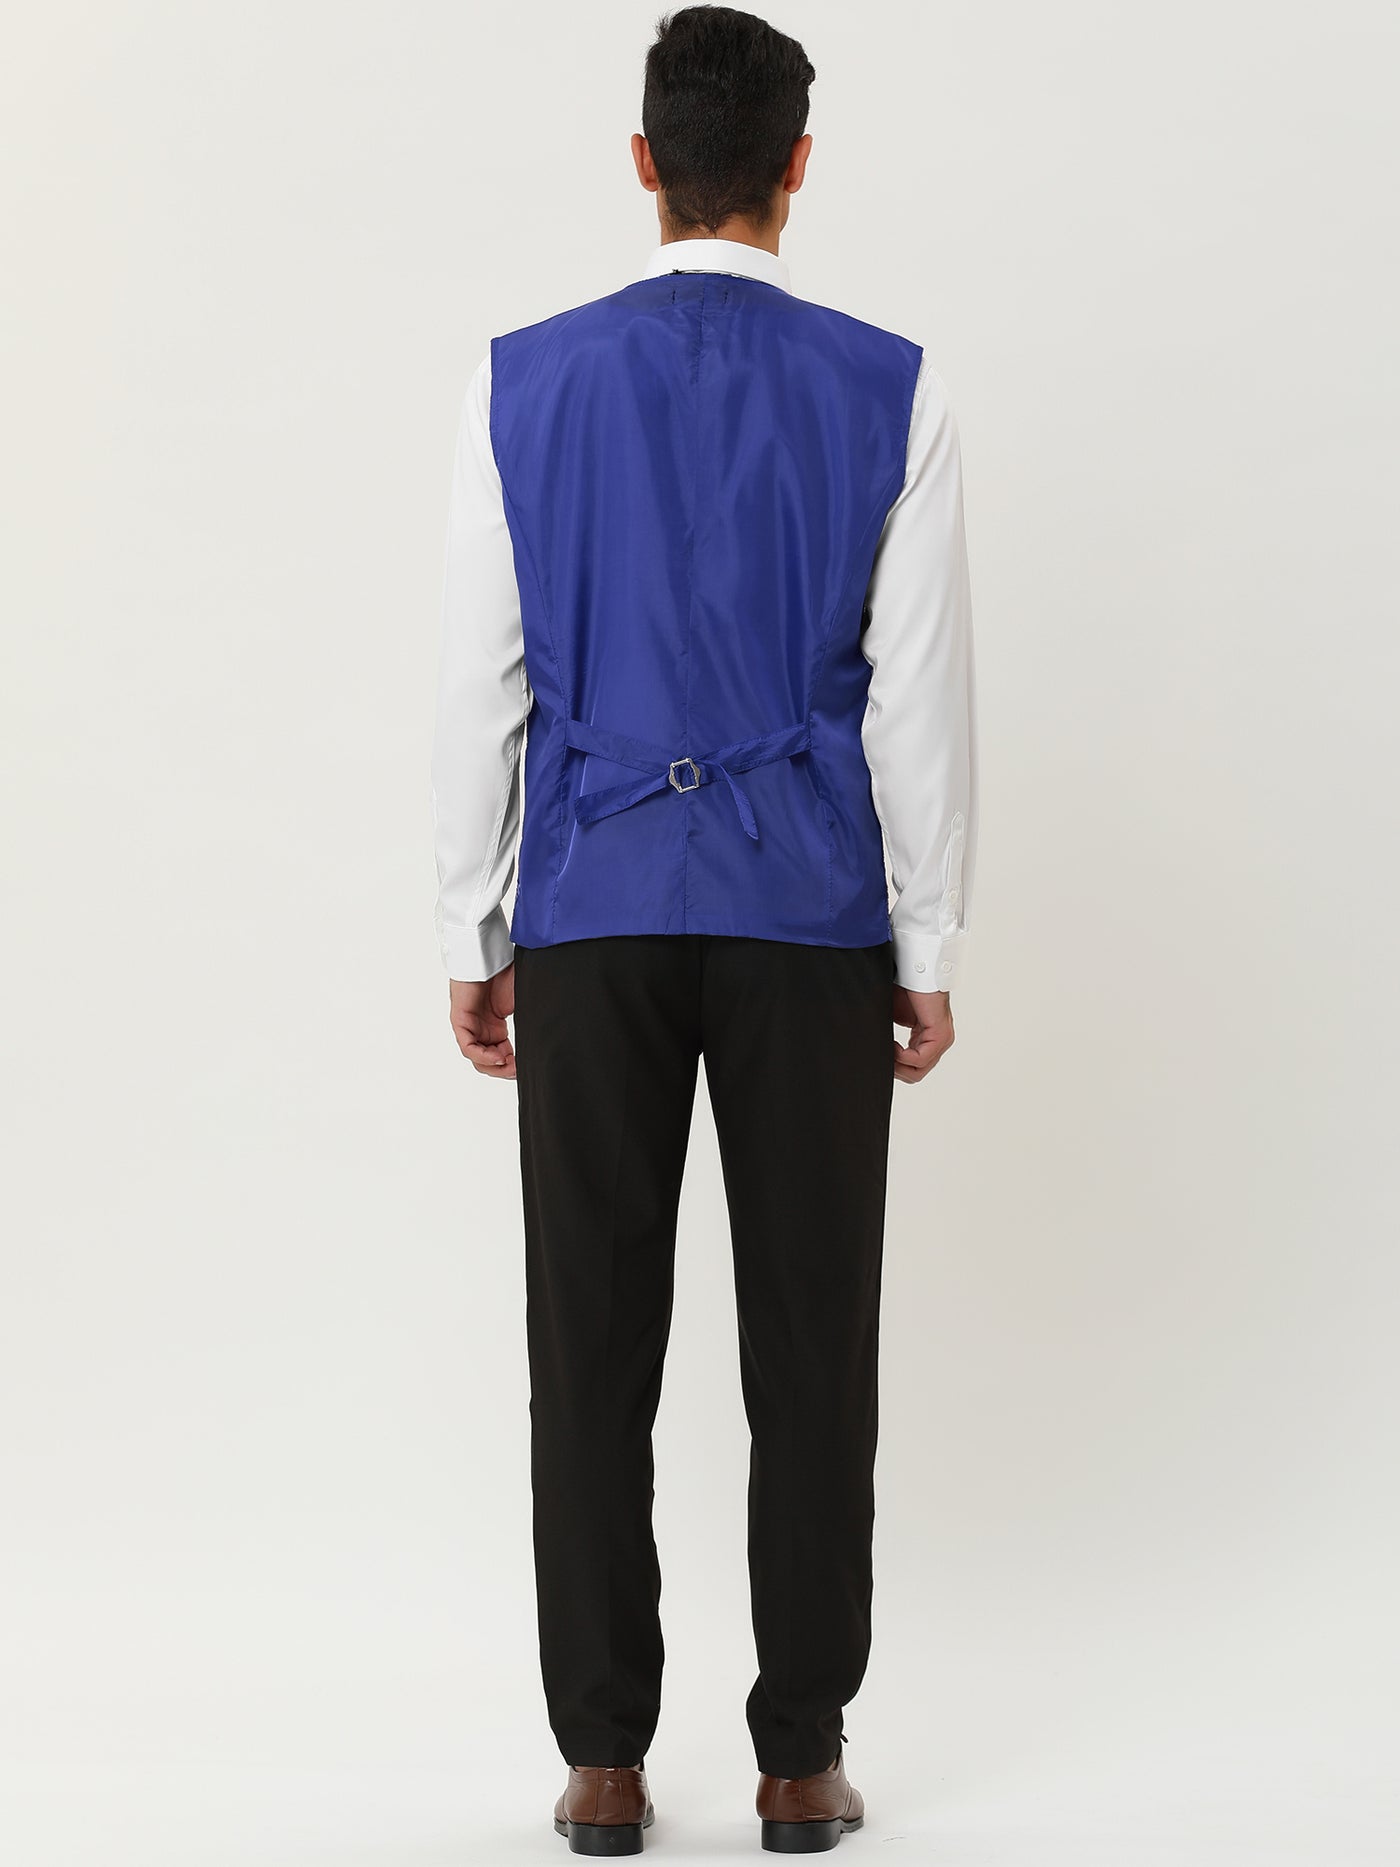 Bublédon Classic Sequin Shiny Single-breasted Party Suit Vest